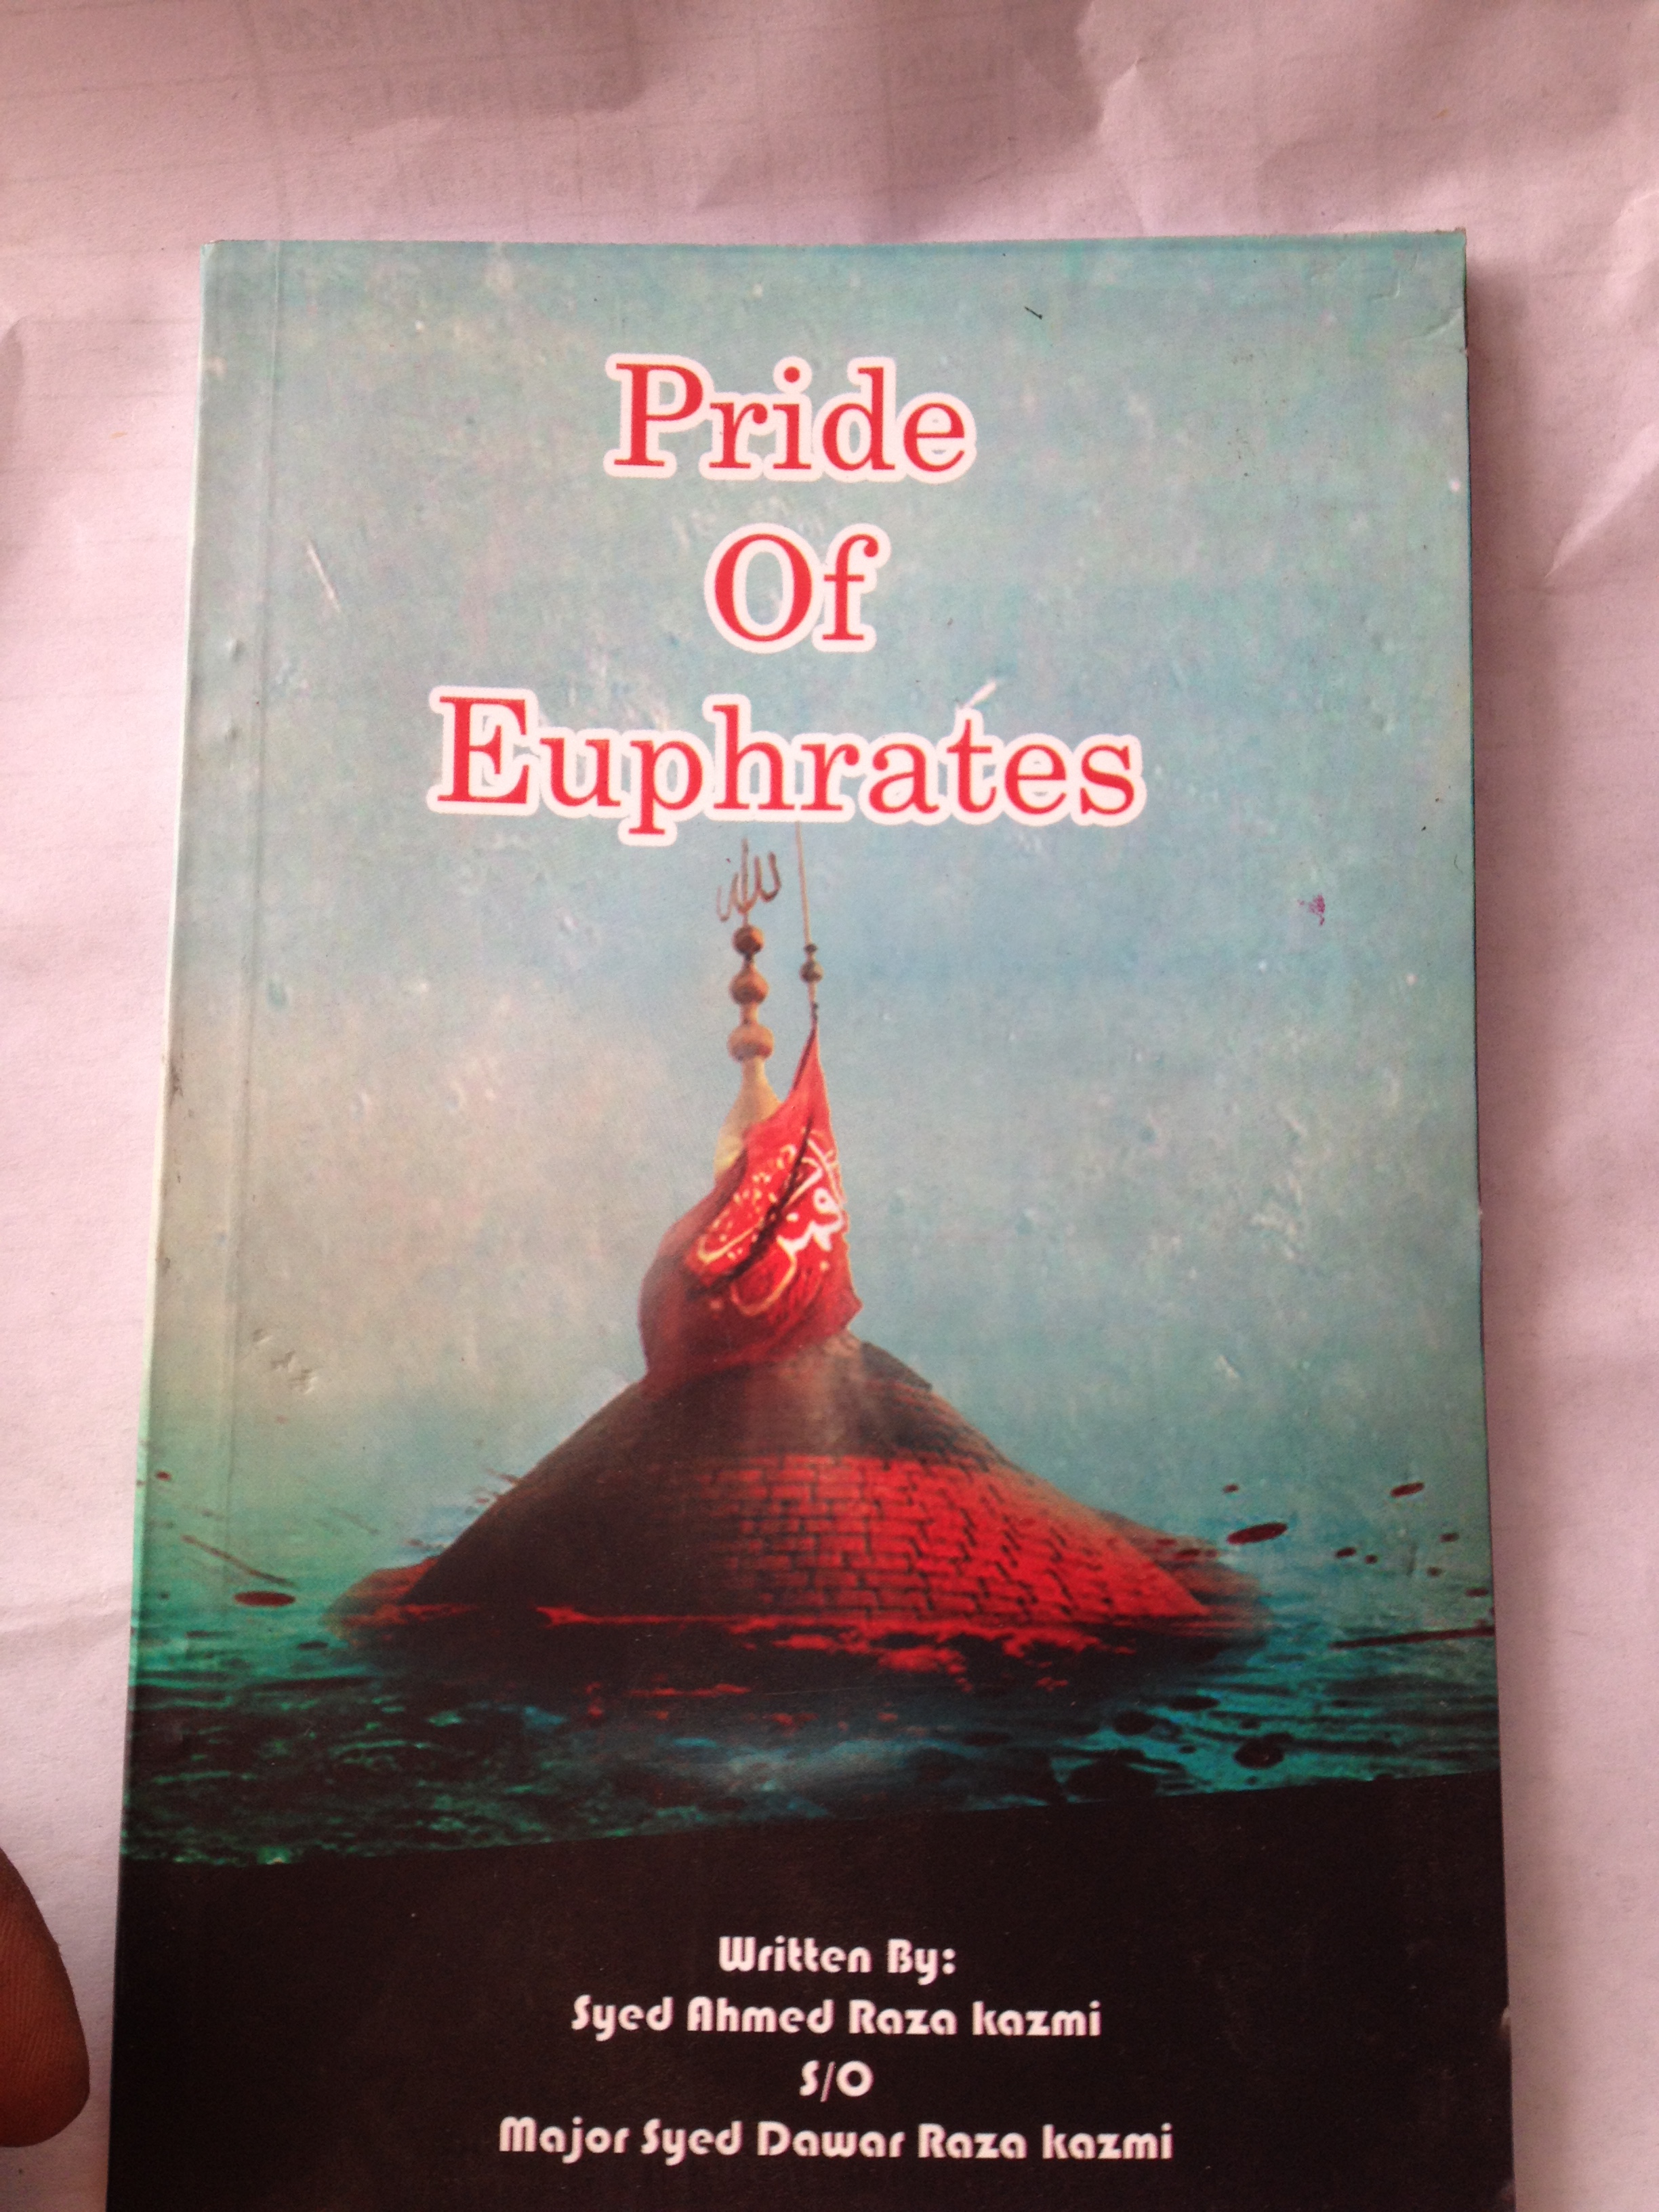 Pride of euphrates
